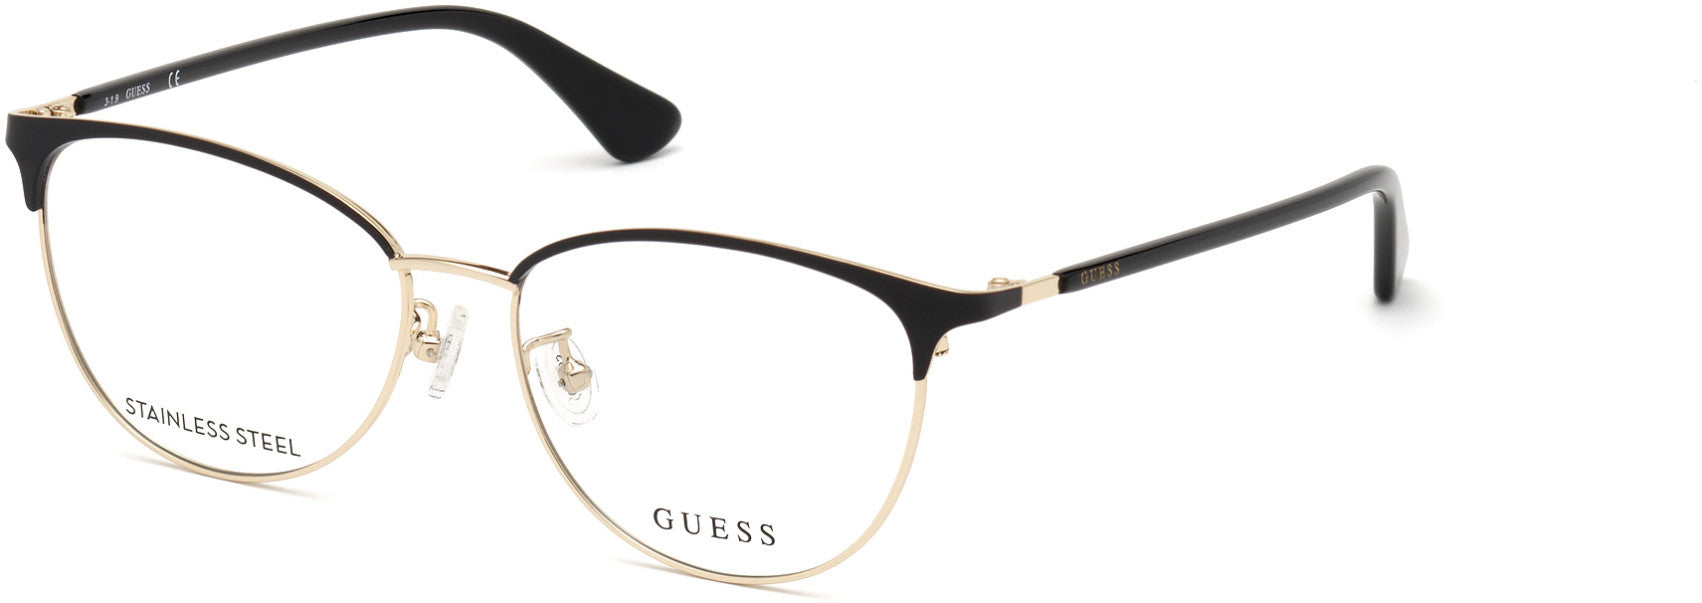 Guess GU2775-D Oval Eyeglasses 001-001 - Shiny Black